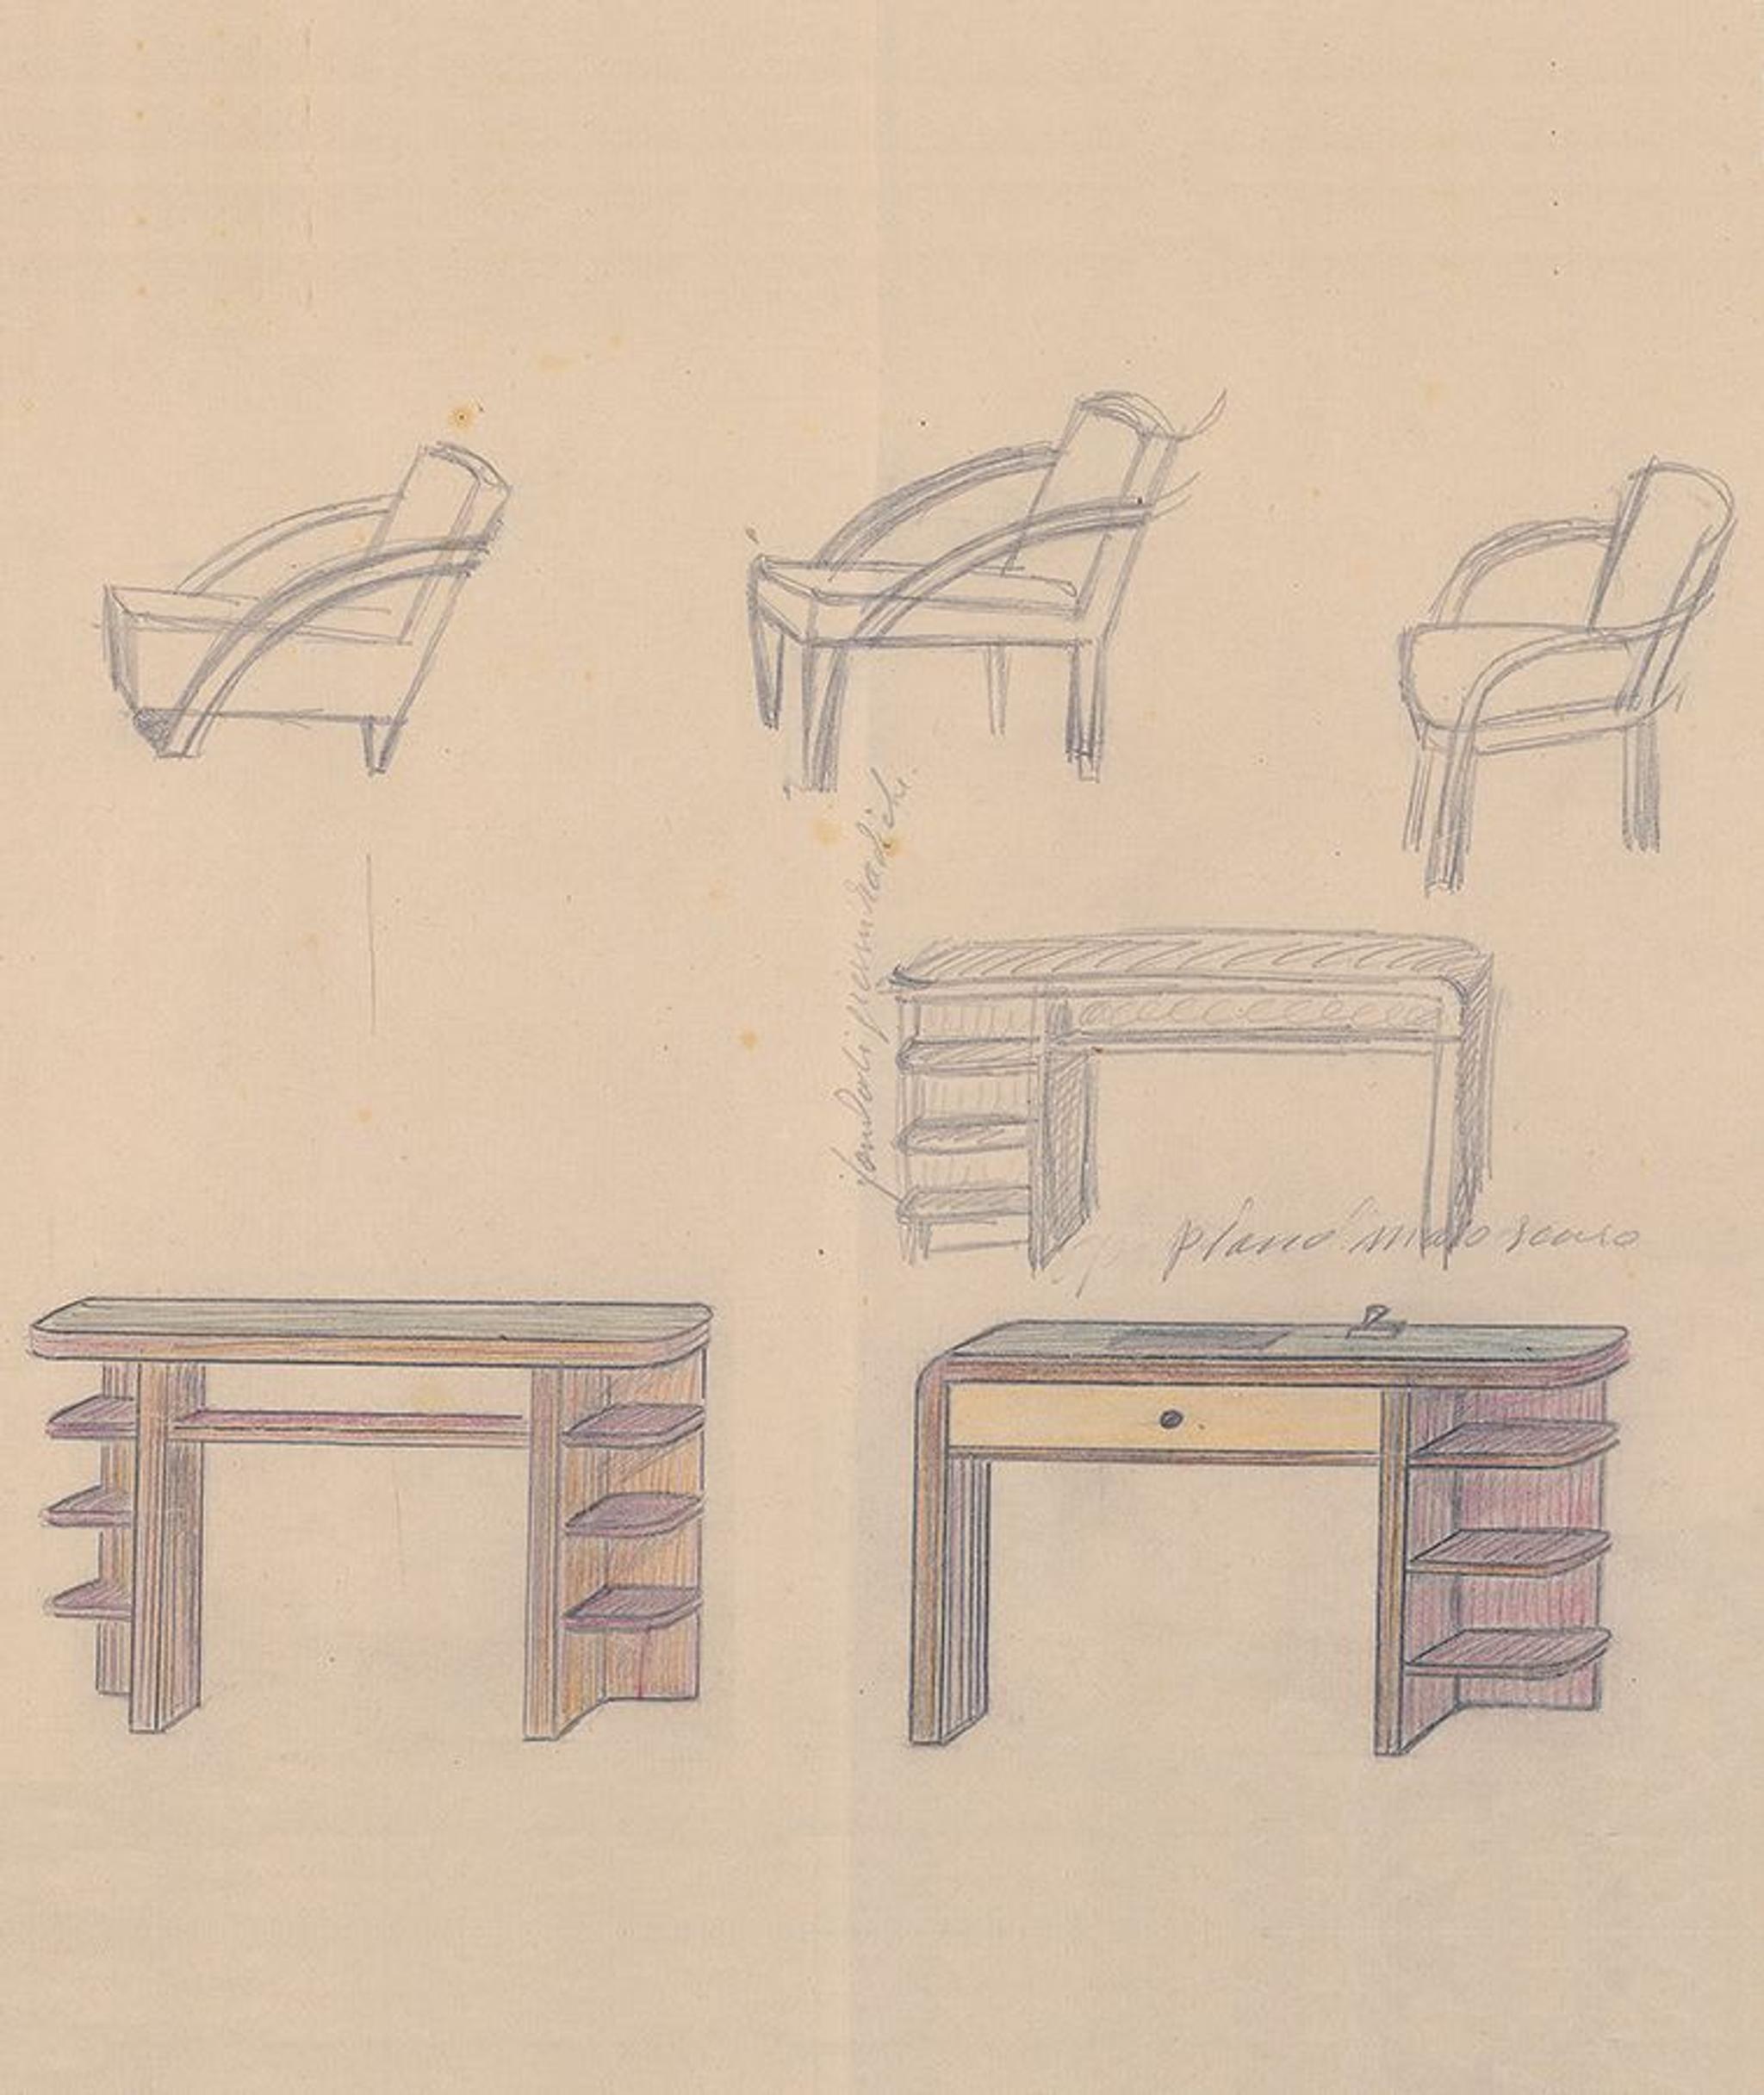 Esquisse de meubles mixtes par Antonio Berdondini